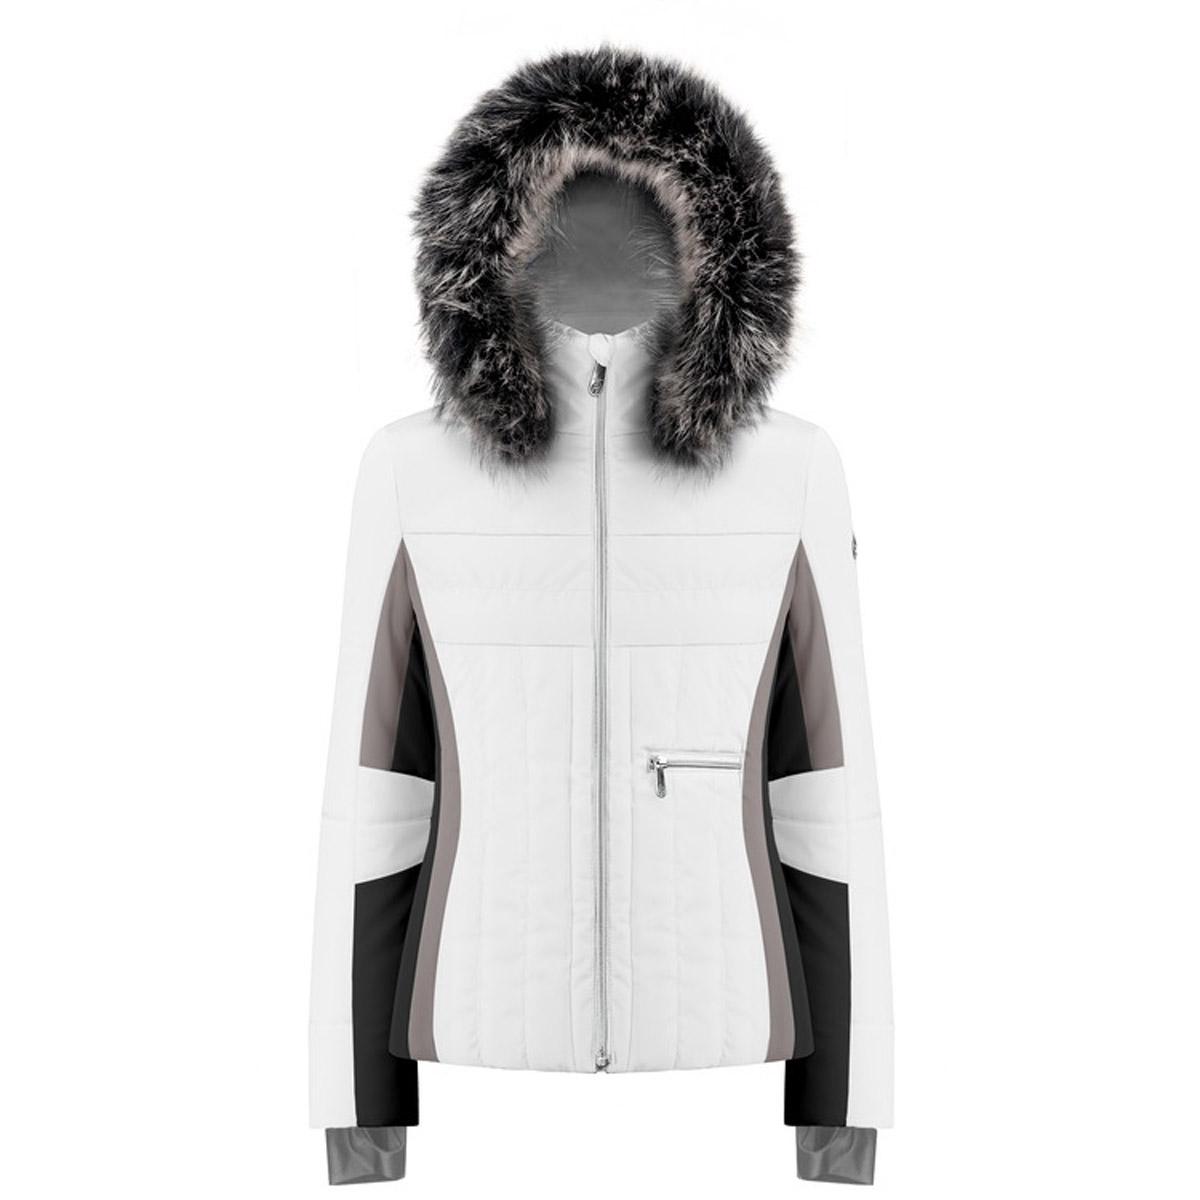 white ski jacket with fur hood